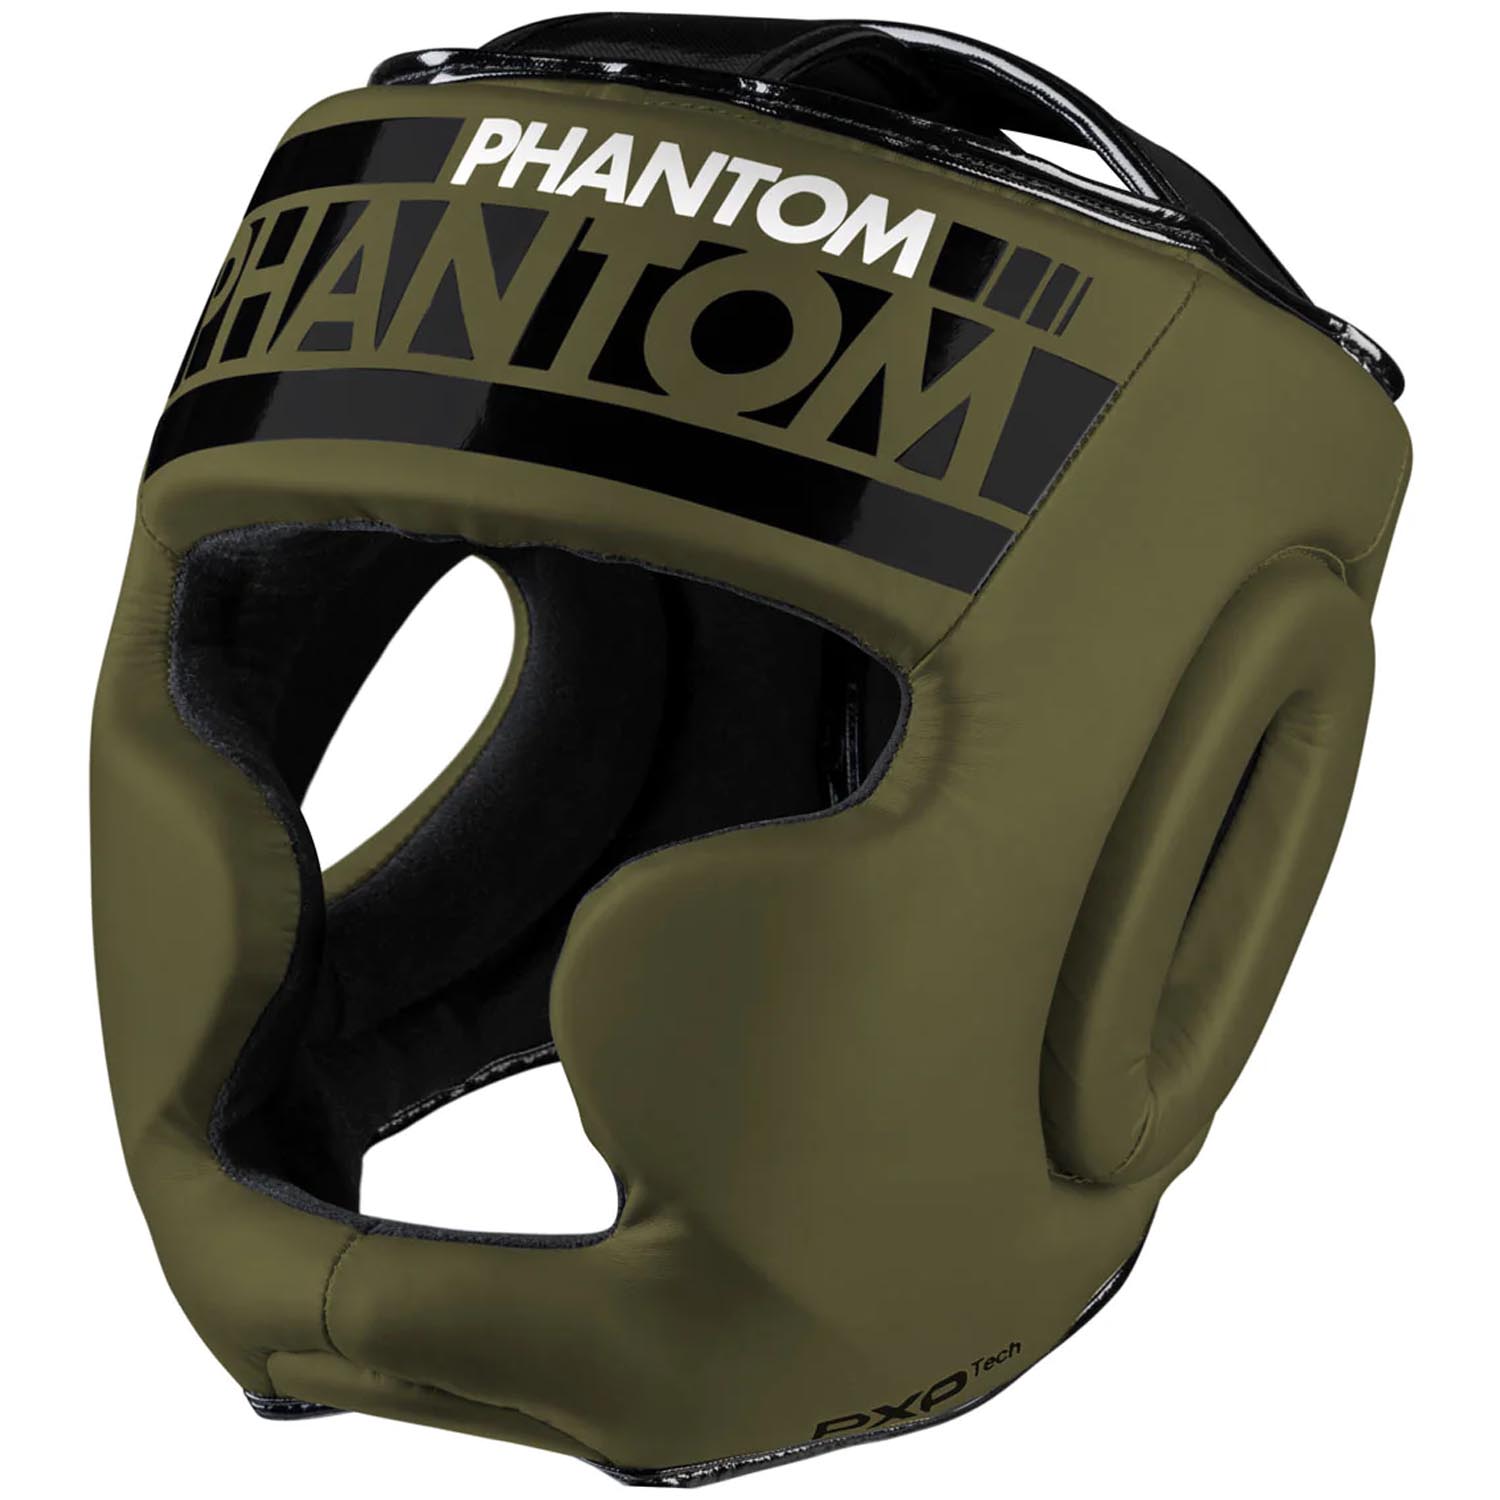 Phantom Athletics Headguard, Apex, Full Face, army